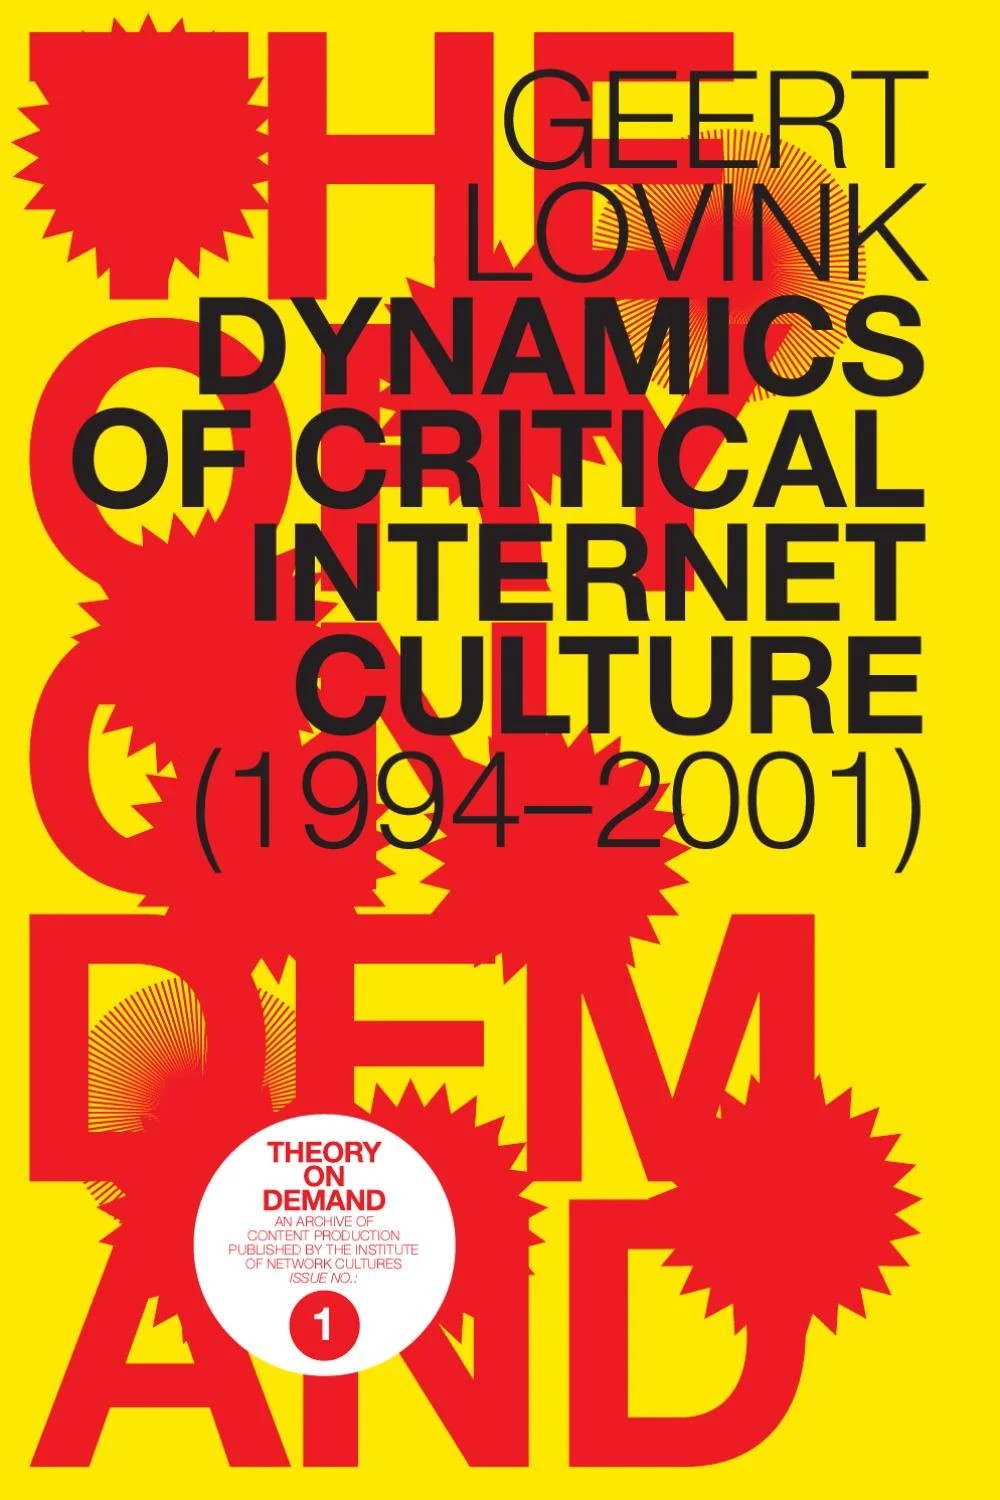 Dynamics of critical internet culture (1994-2001)